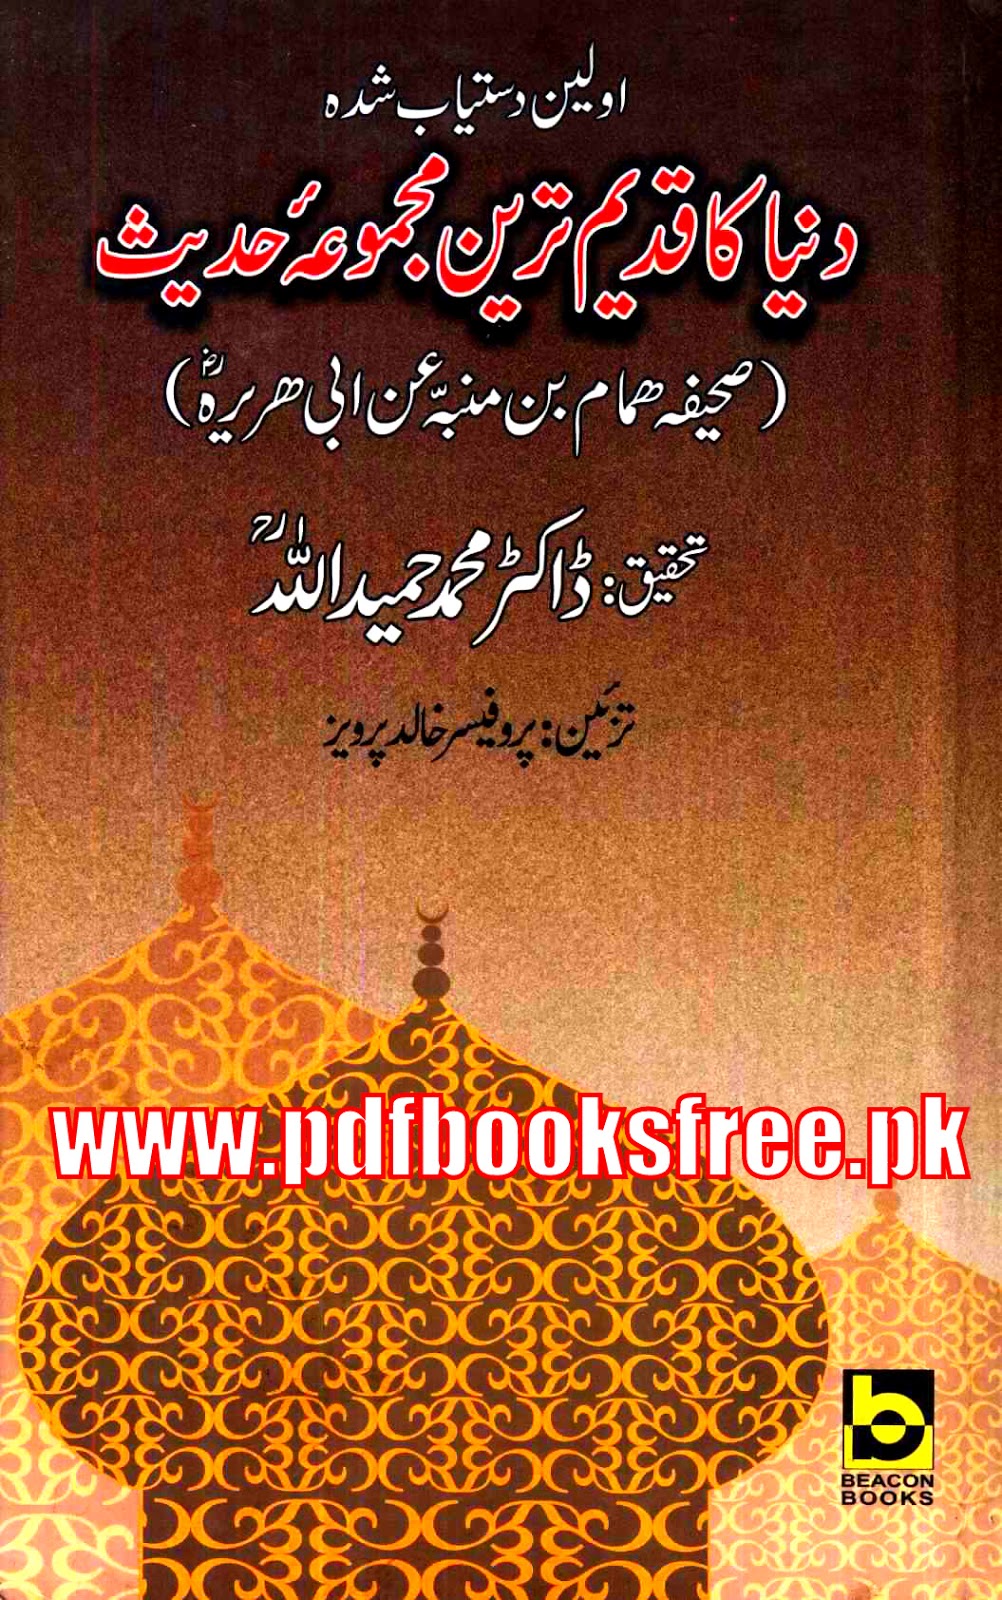 Islamic hadith collection pdf